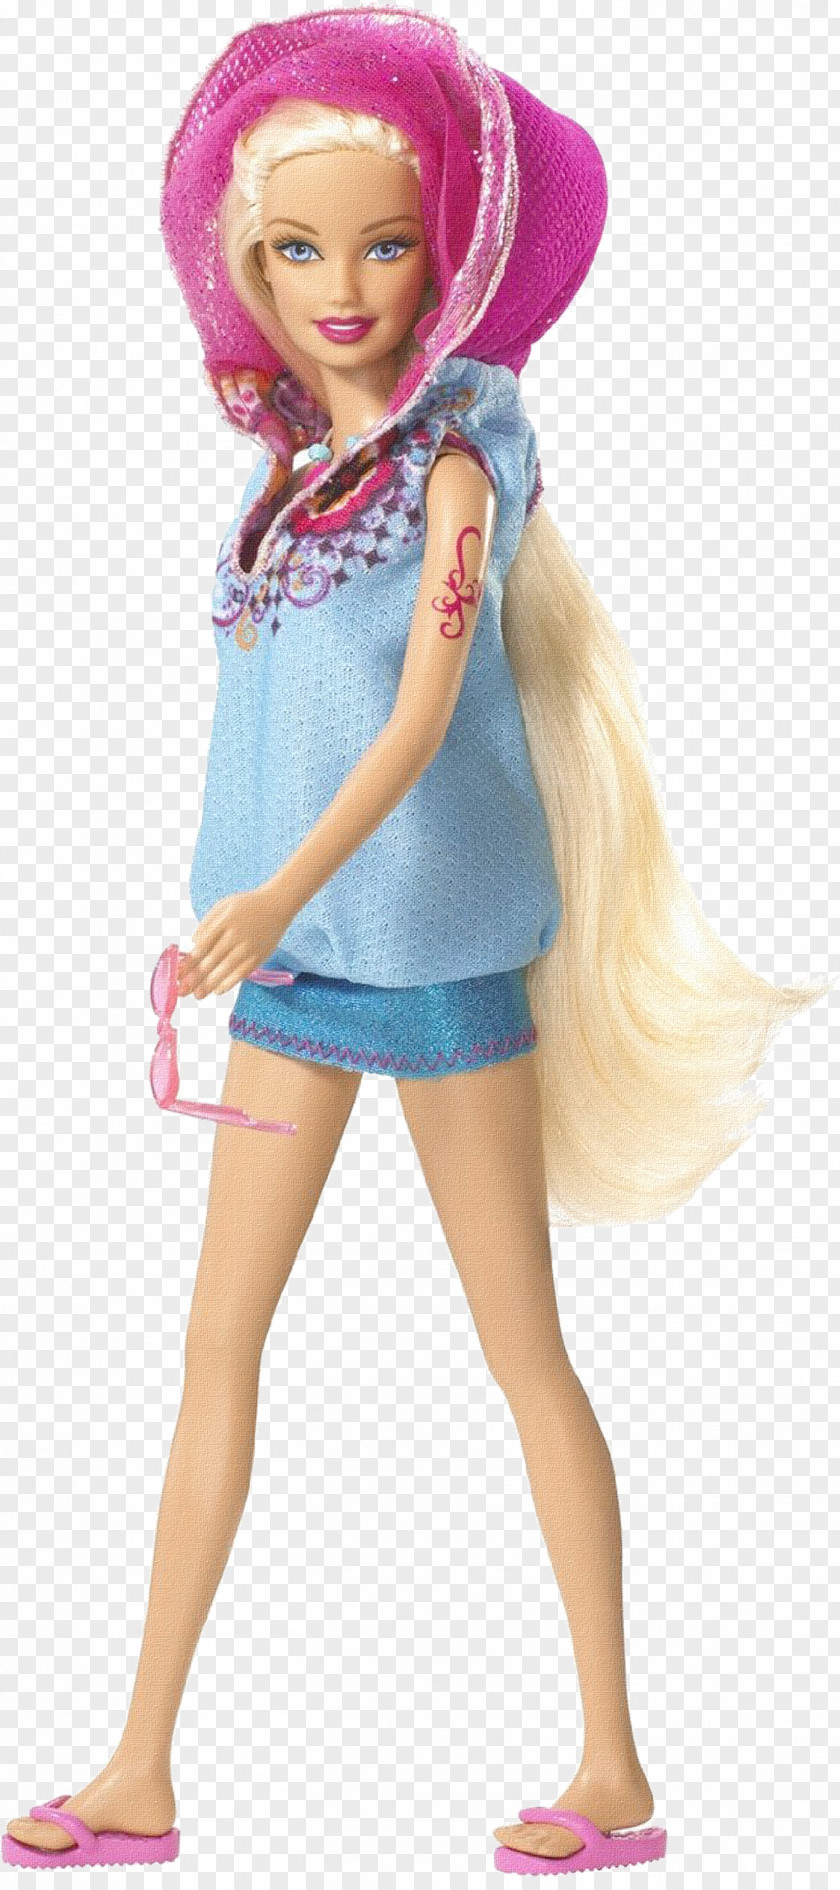 Barbie Doll Merliah Summers In A Mermaid Tale Amazon.com Pufferazzi PNG